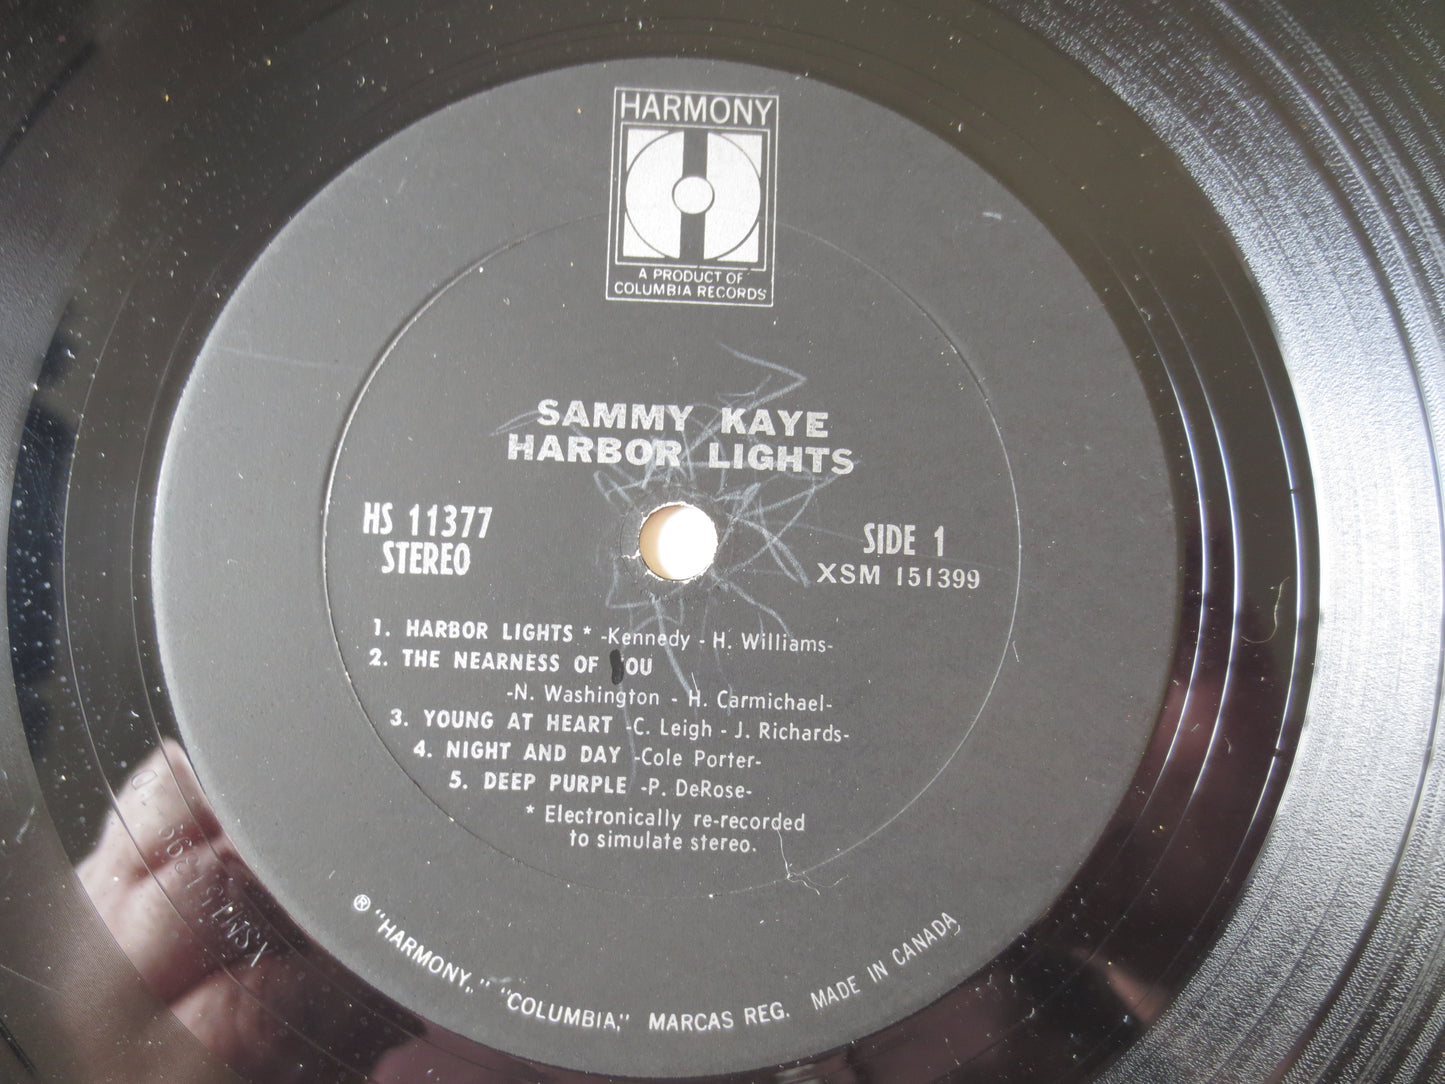 SAMMY KAYE, Harbor Lights, Sammy Kaye Records, Sammy Kaye Albums, Soundtrack Records, Records, Vinyl Albums, 1969 Records